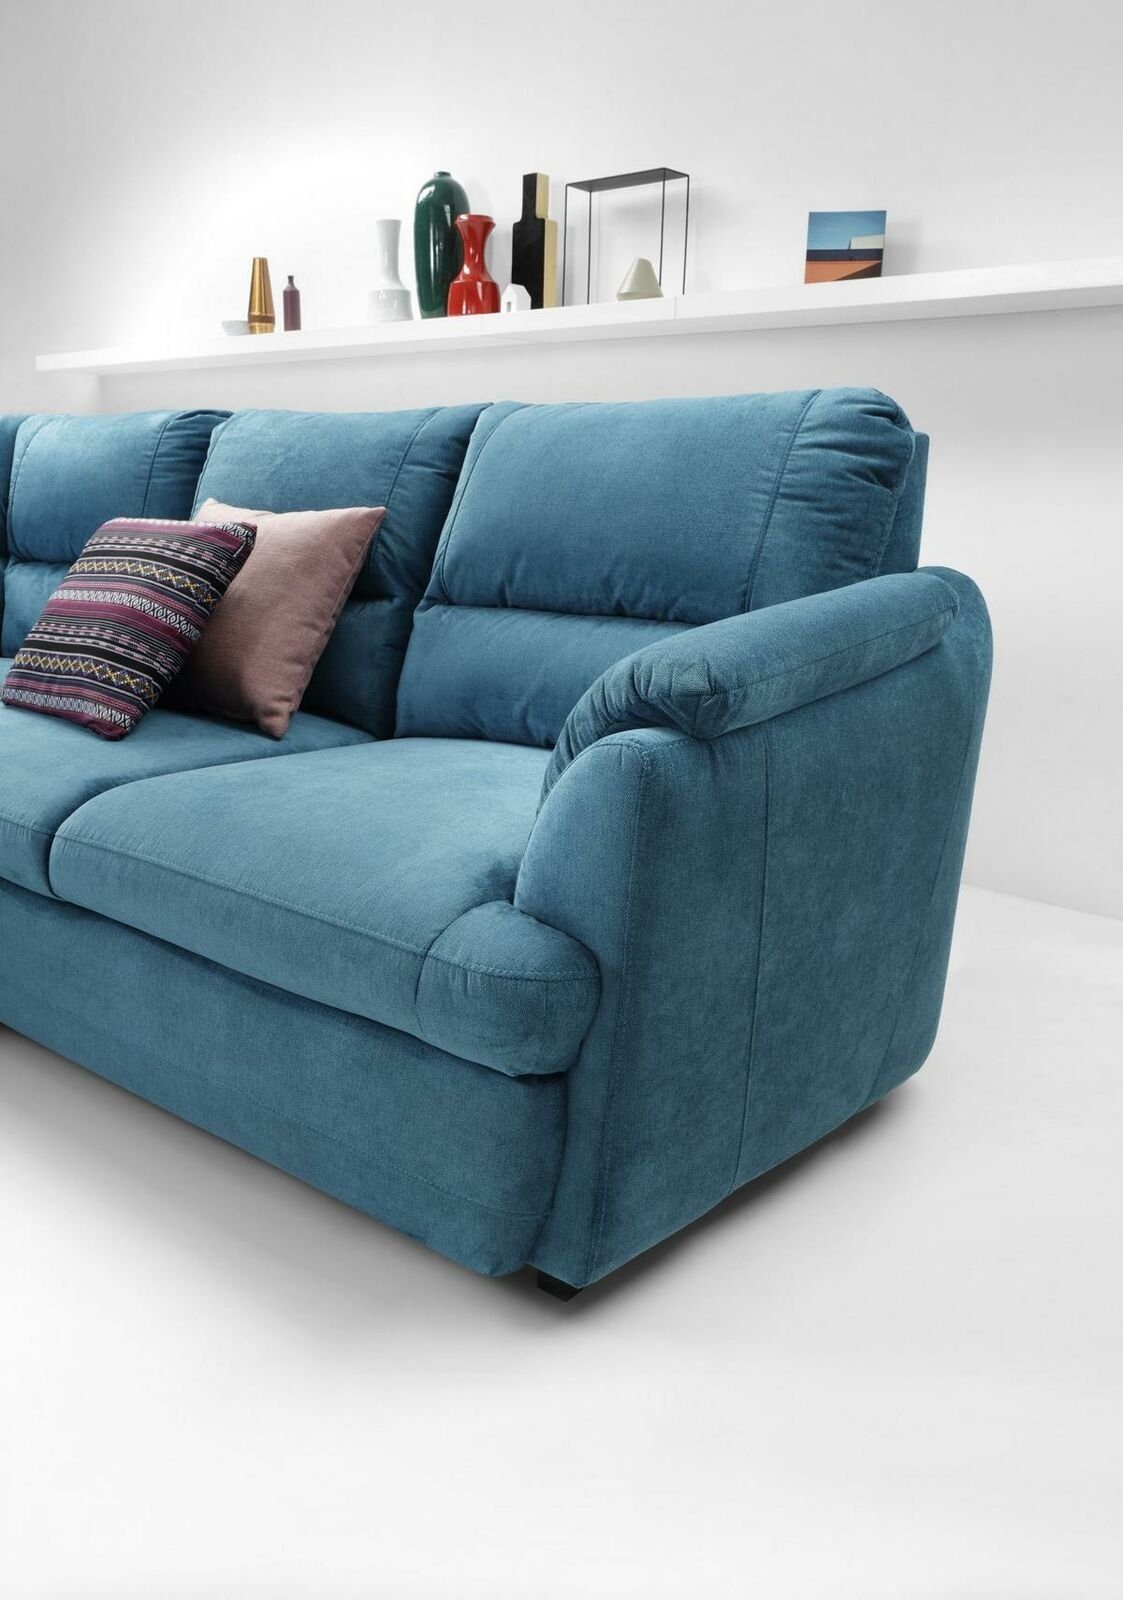 Design Ecksofa Moderne Stoff JVmoebel Ecksofa, Neu L-Form Bett Couchs Blau Couch Sofas